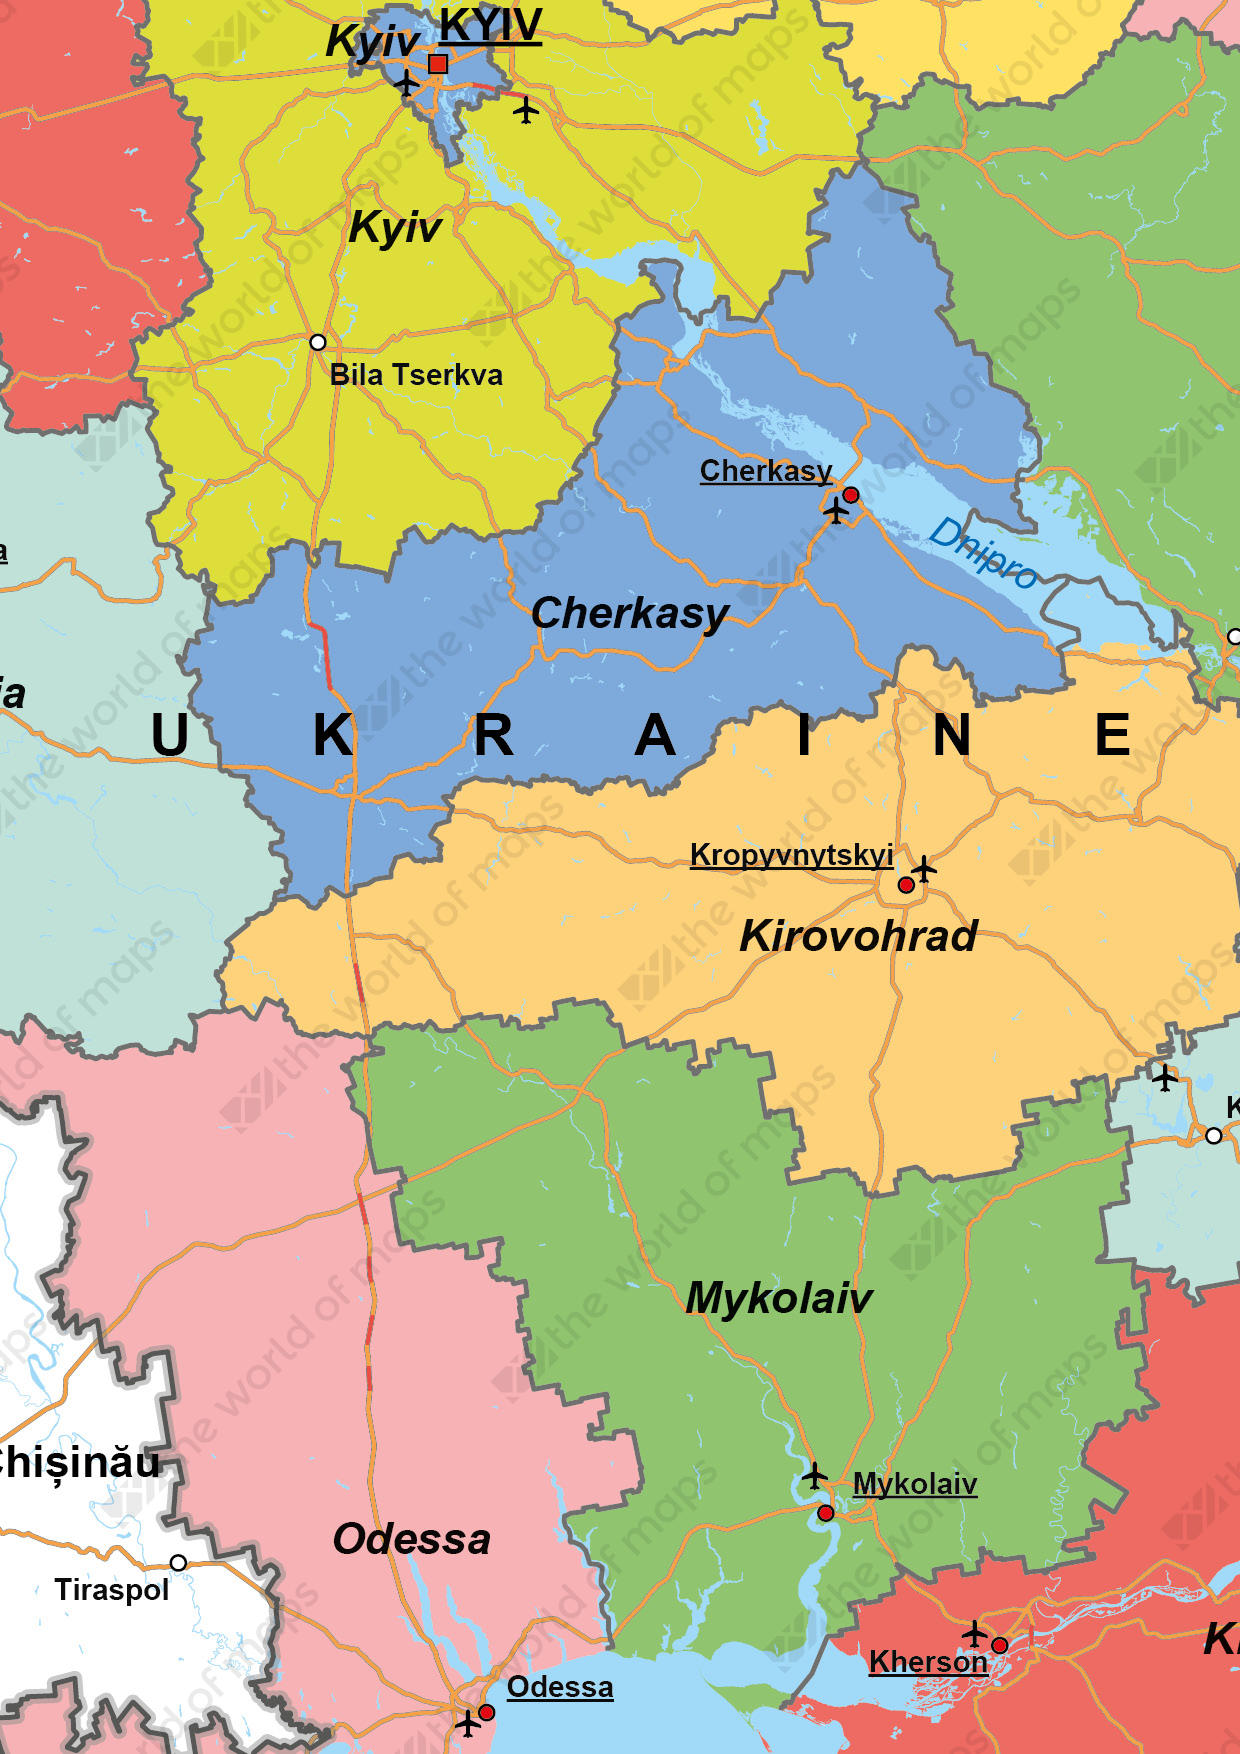 Digital political map of Ukraine detail